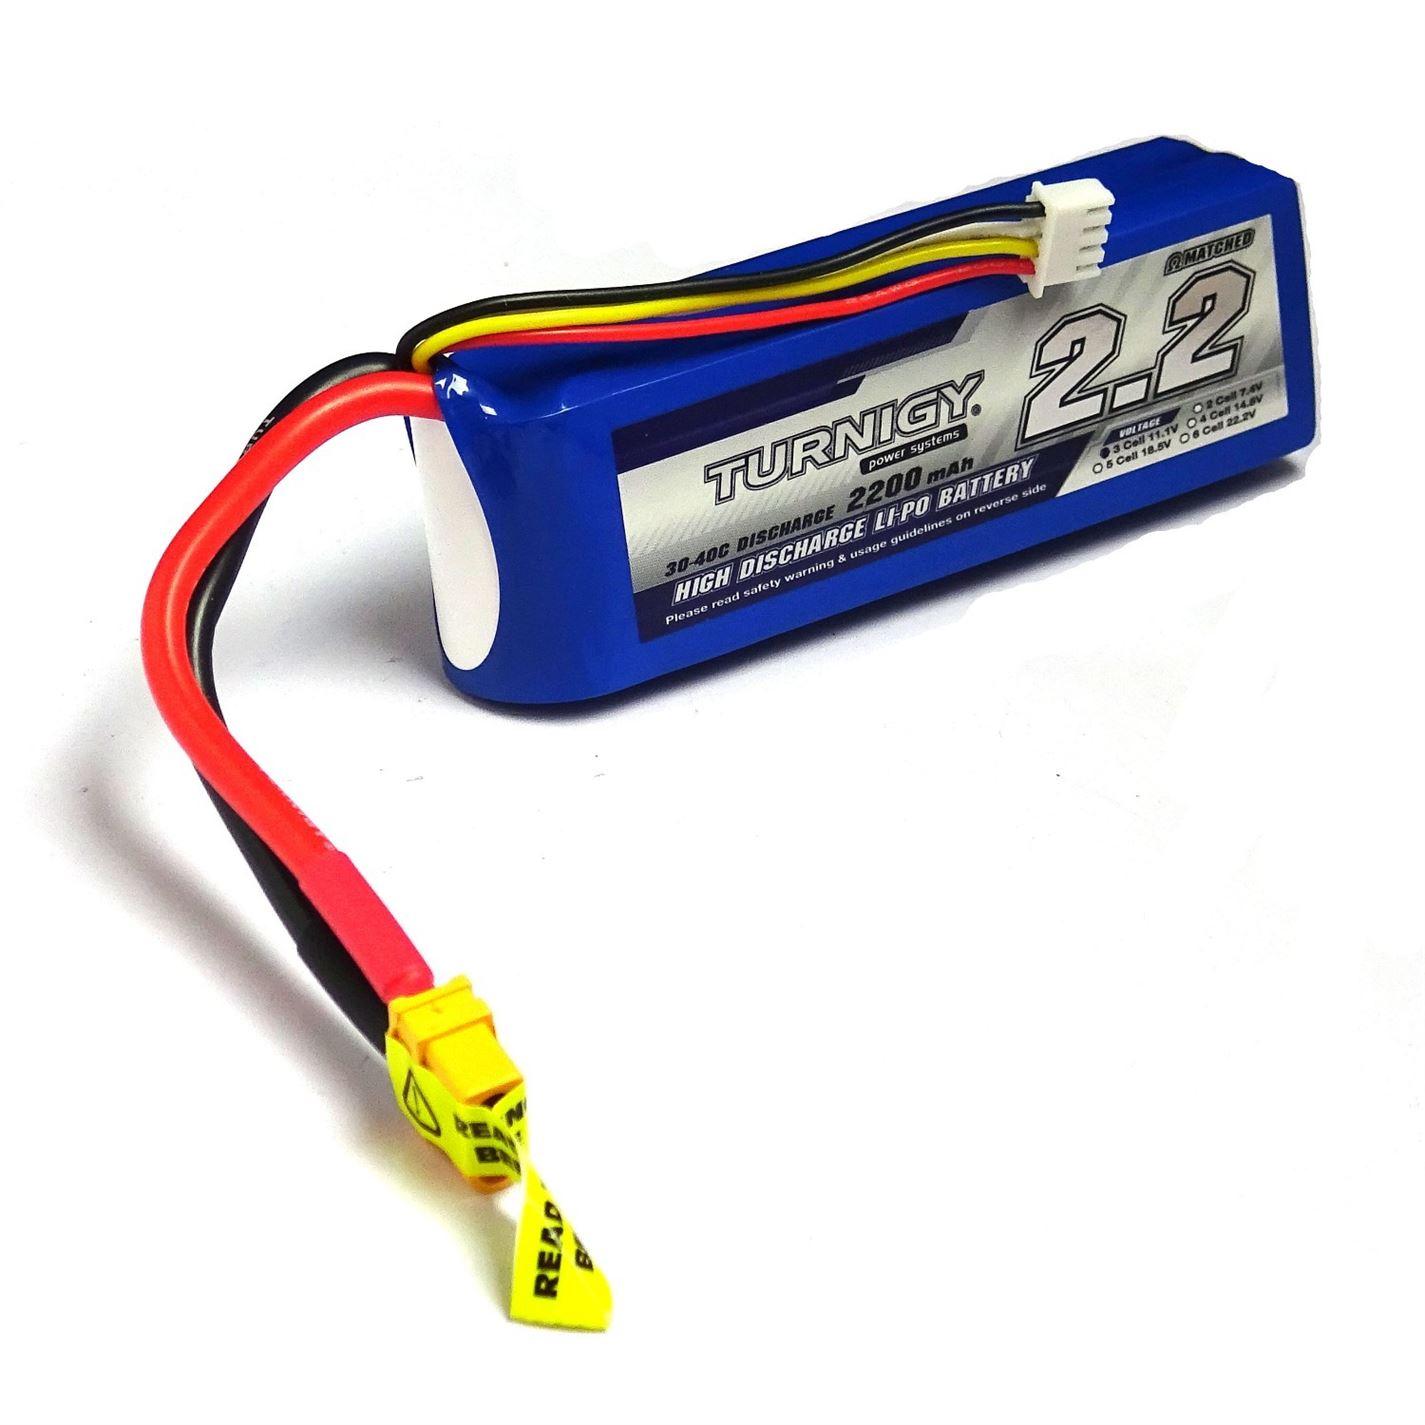 Turnigy 2200mAh 3S 30C Lipo Battery Pack - UK Seller